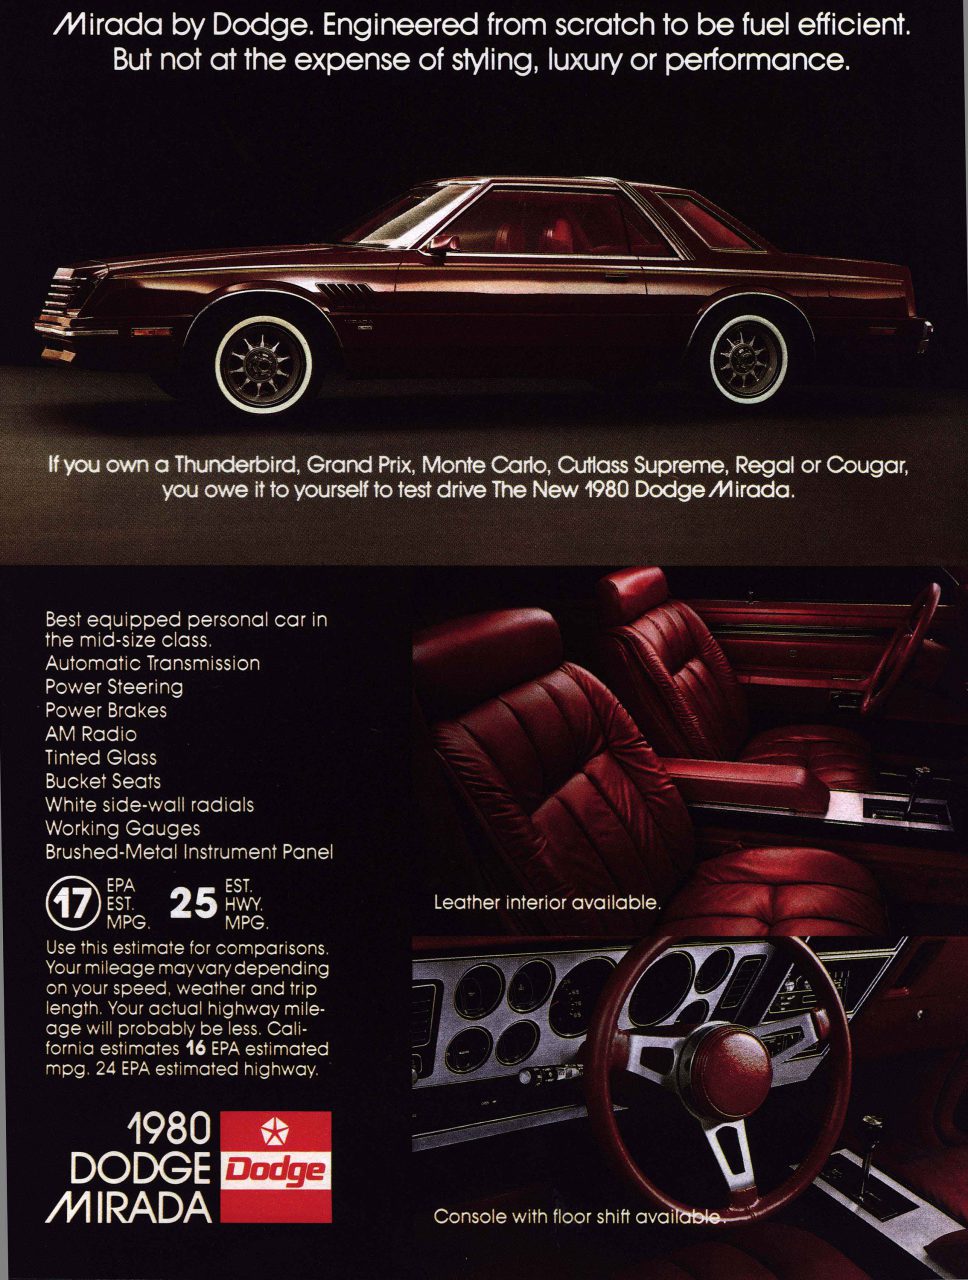 1980 Dodge Mirada advertisement